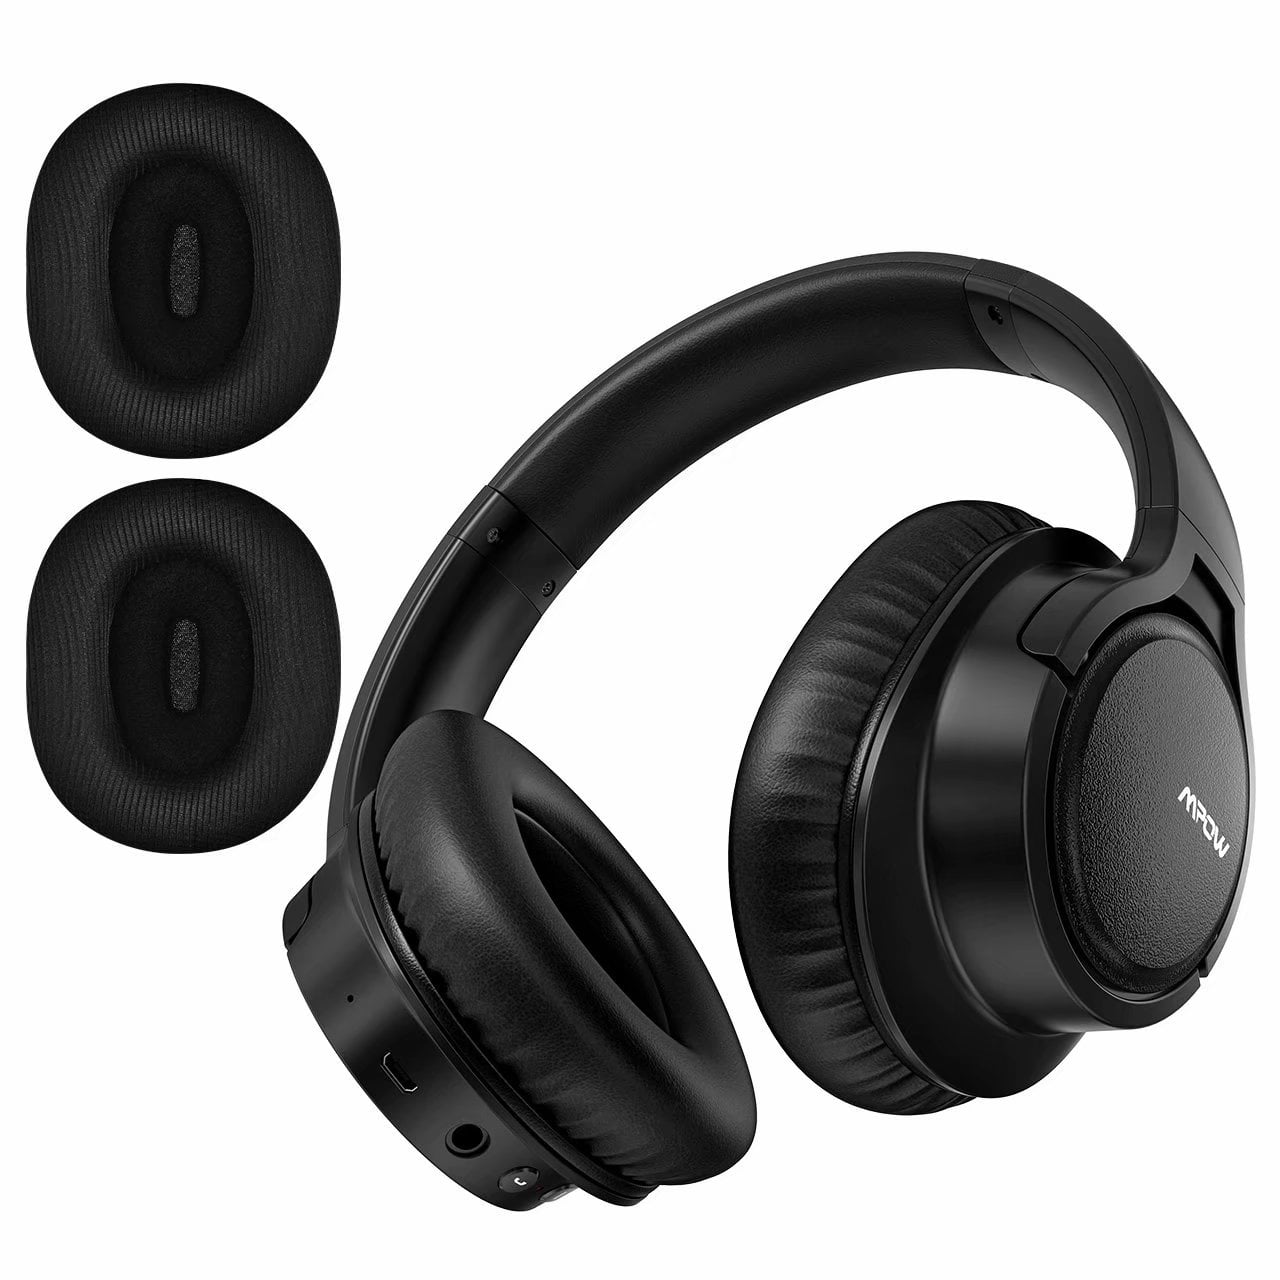 Mpow H7 Plus Bluetooth Headphone Powerful Bass And Aptx Cd Like Audio Stereo Wireless Over Ear Headphone With Cvc6 0 Micphone Replaceable Passive Radiators Earmuffs For Cellphone Tablet Pc Walmart Com Walmart Com